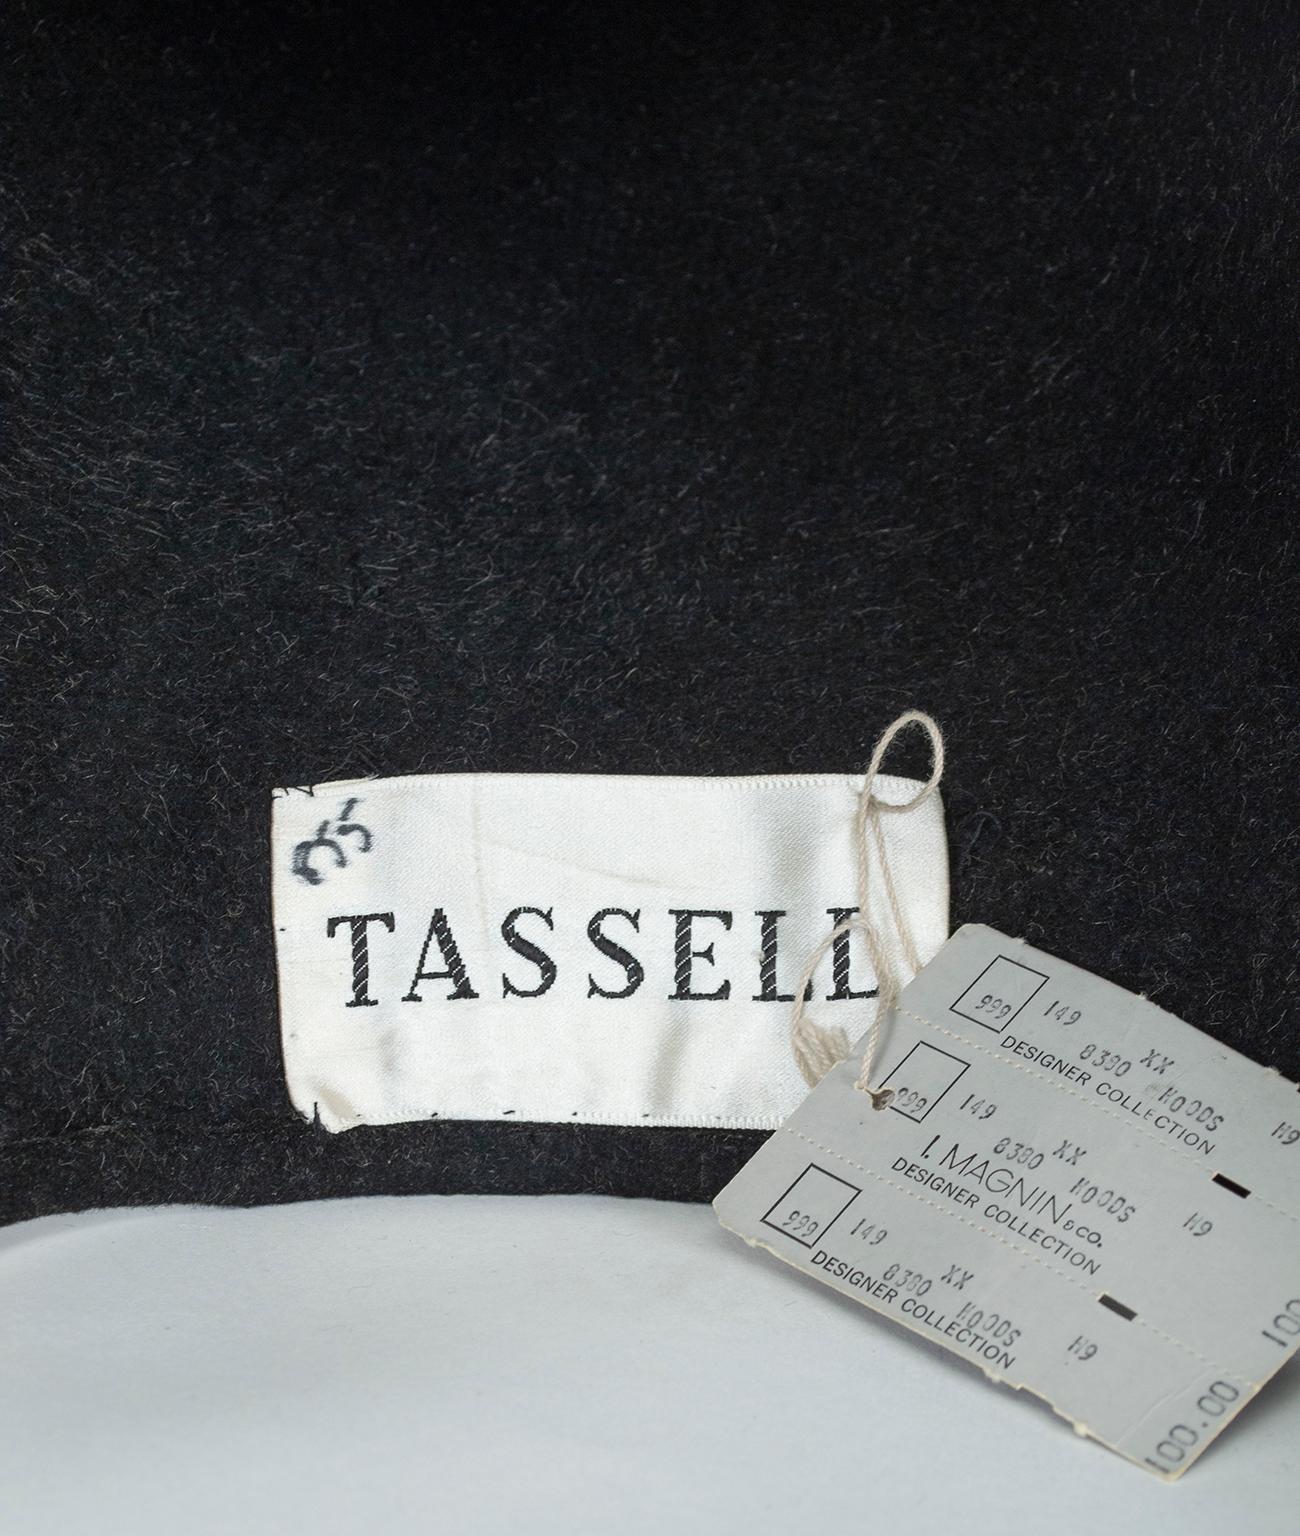 Gustave Tassell Charcoal Balaclava Helmet - Original Tags, 1960s 3